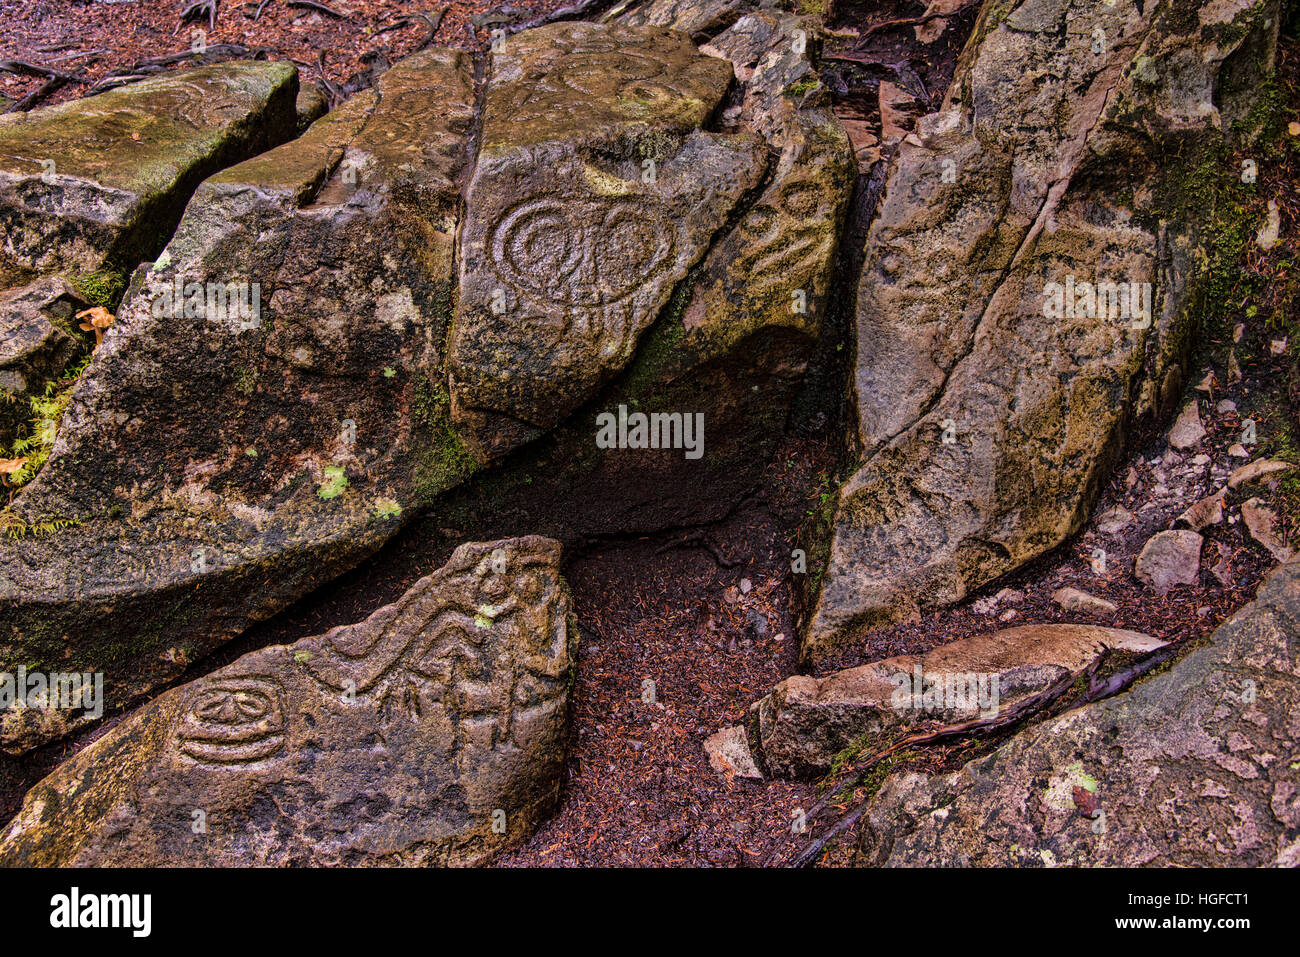 bella coola petroglyphs, bc, Canada Stock Photo